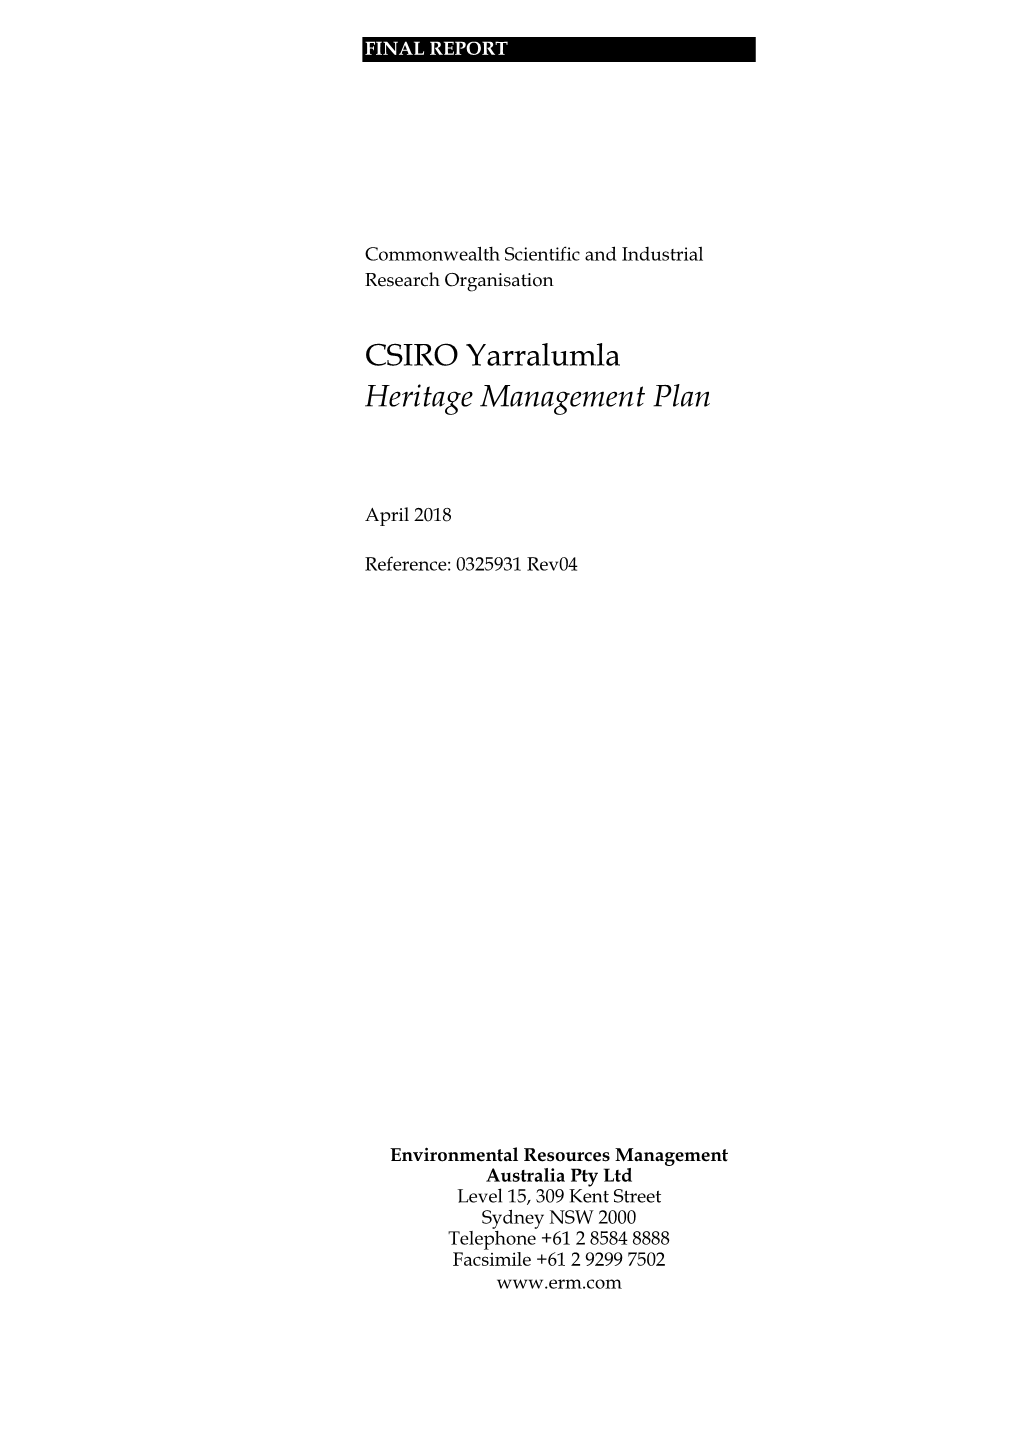 CSIRO Yarralumla Heritage Management Plan